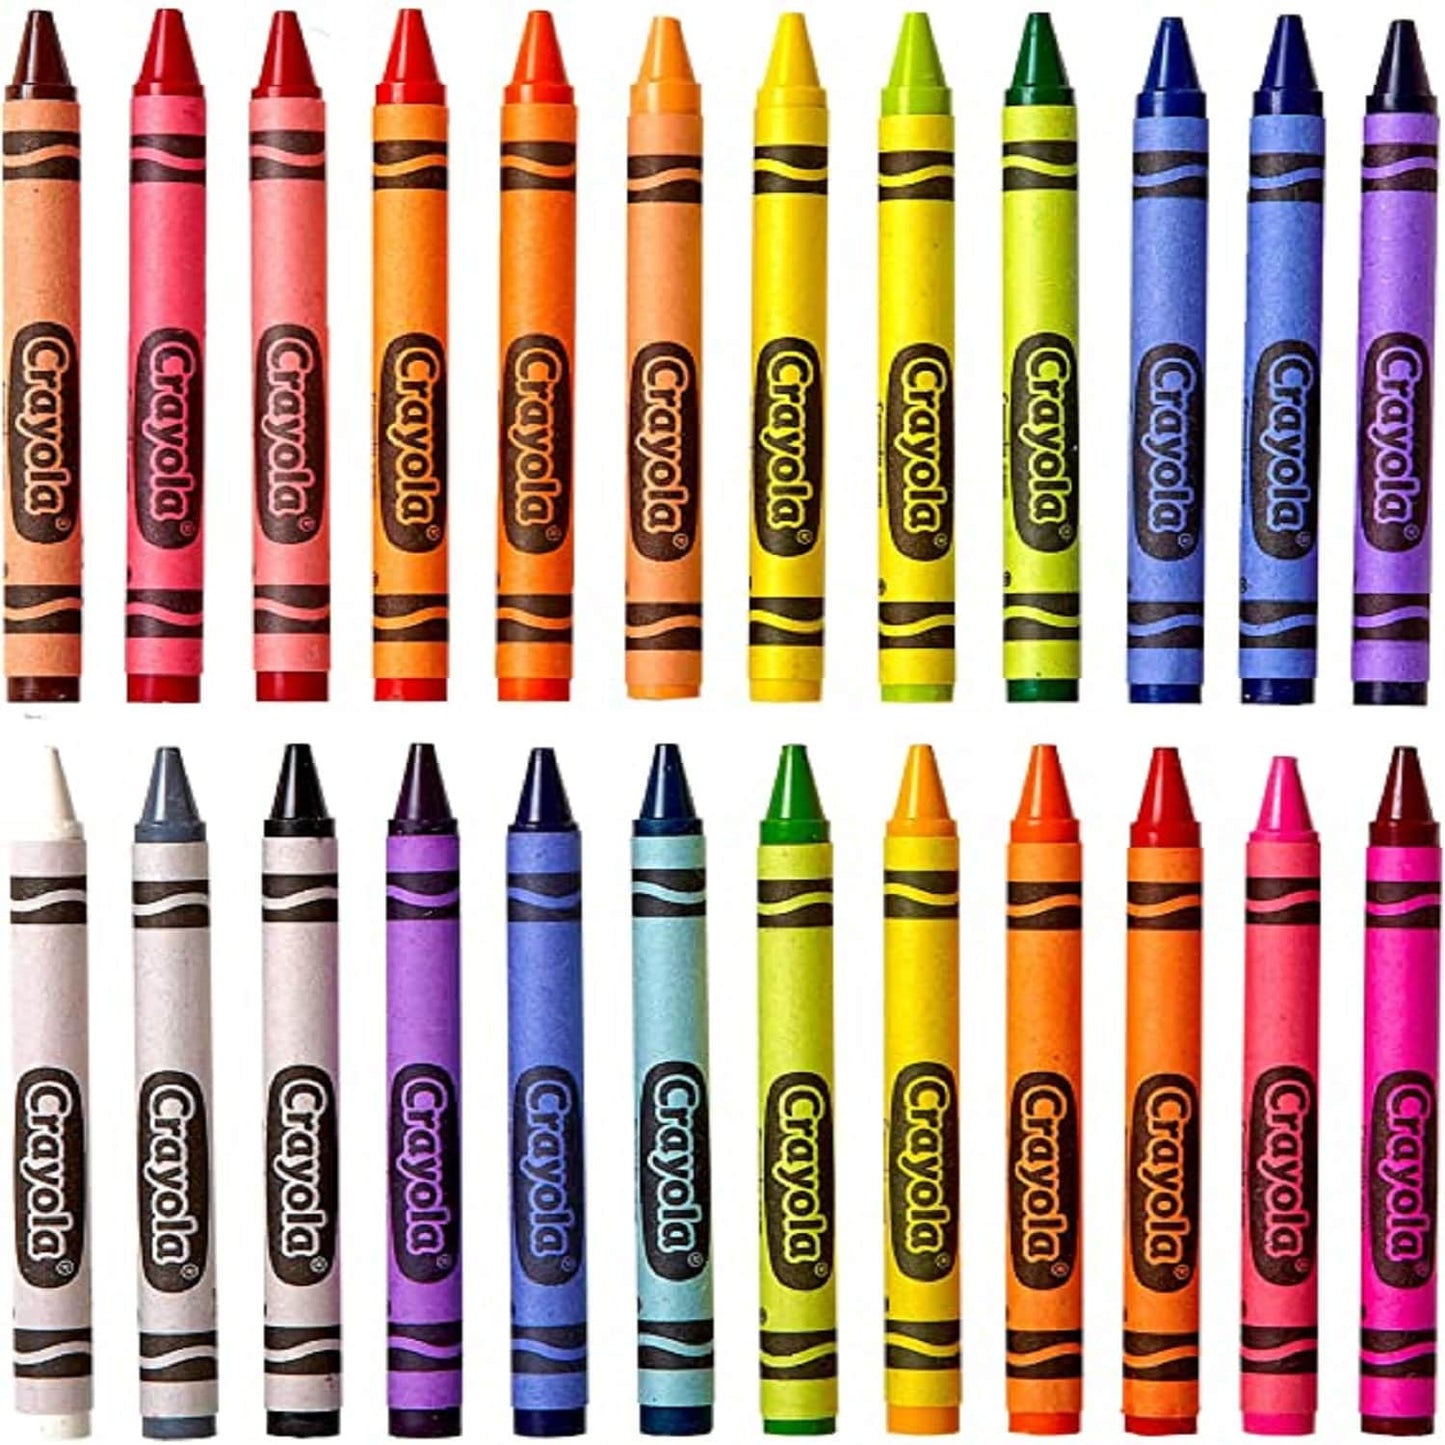 Crayola 24 Assorted Crayons x 6 packs